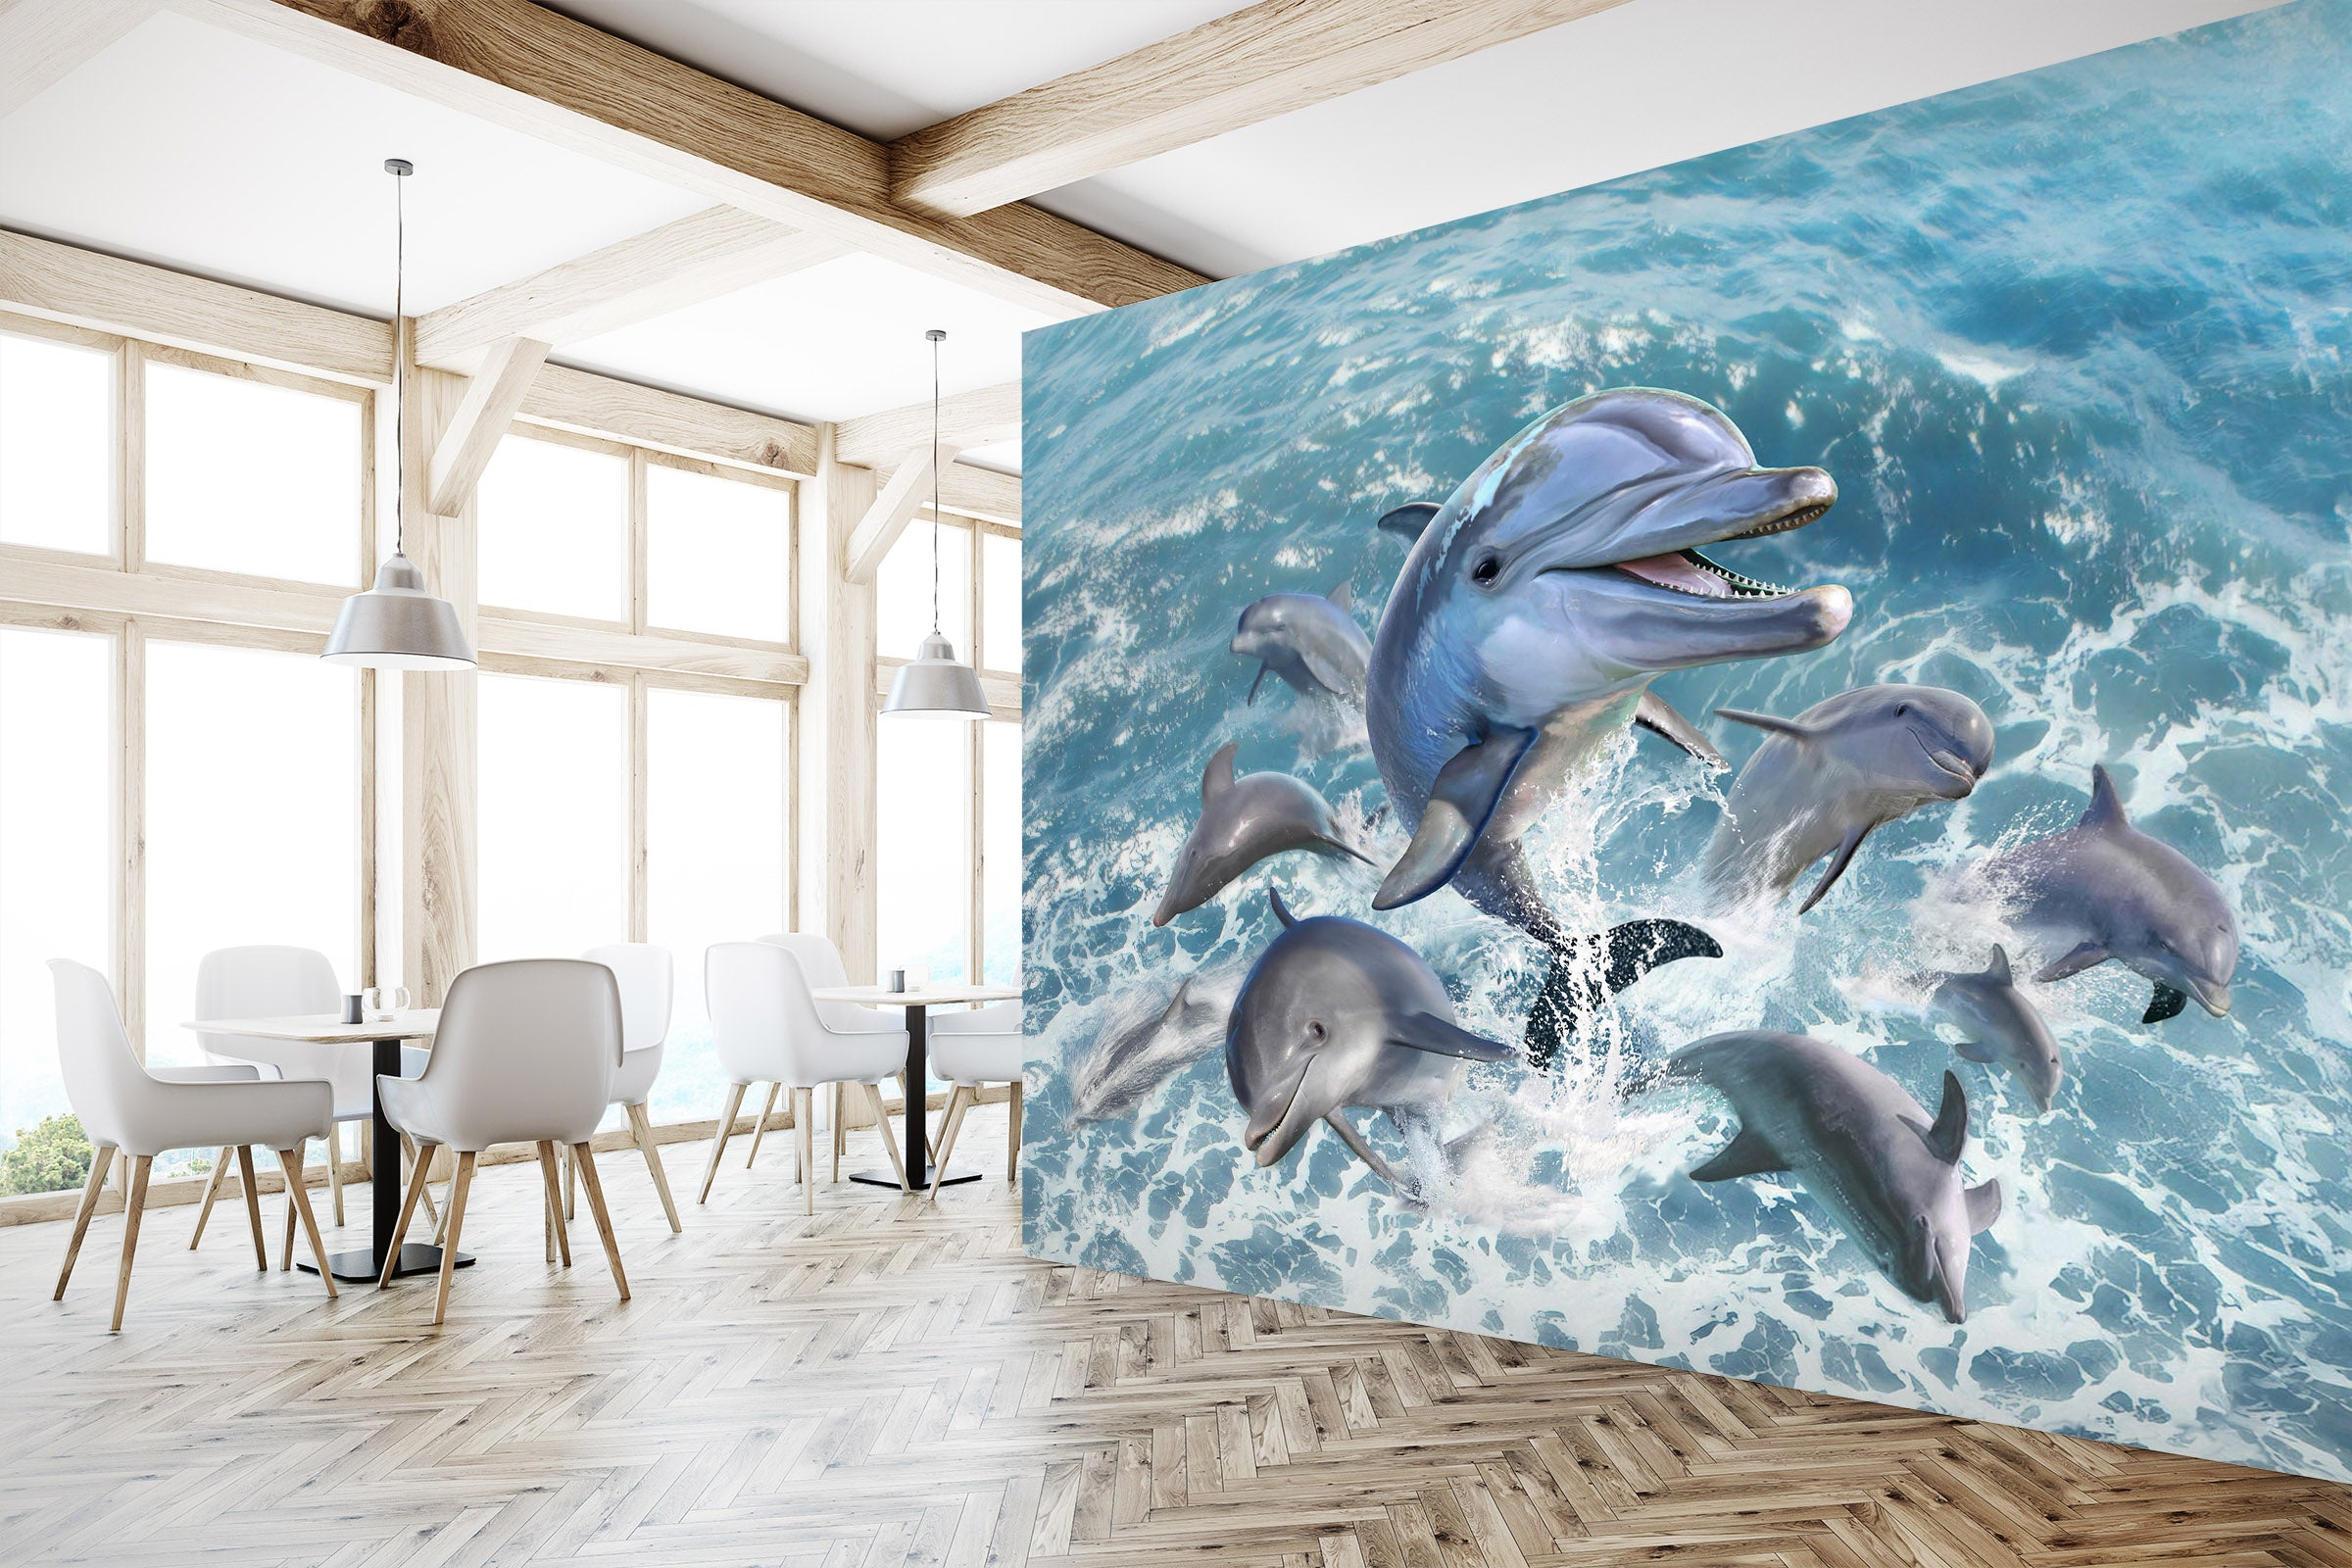 3D Dolphin Jump 104 Jerry LoFaro Wall Mural Wall Murals